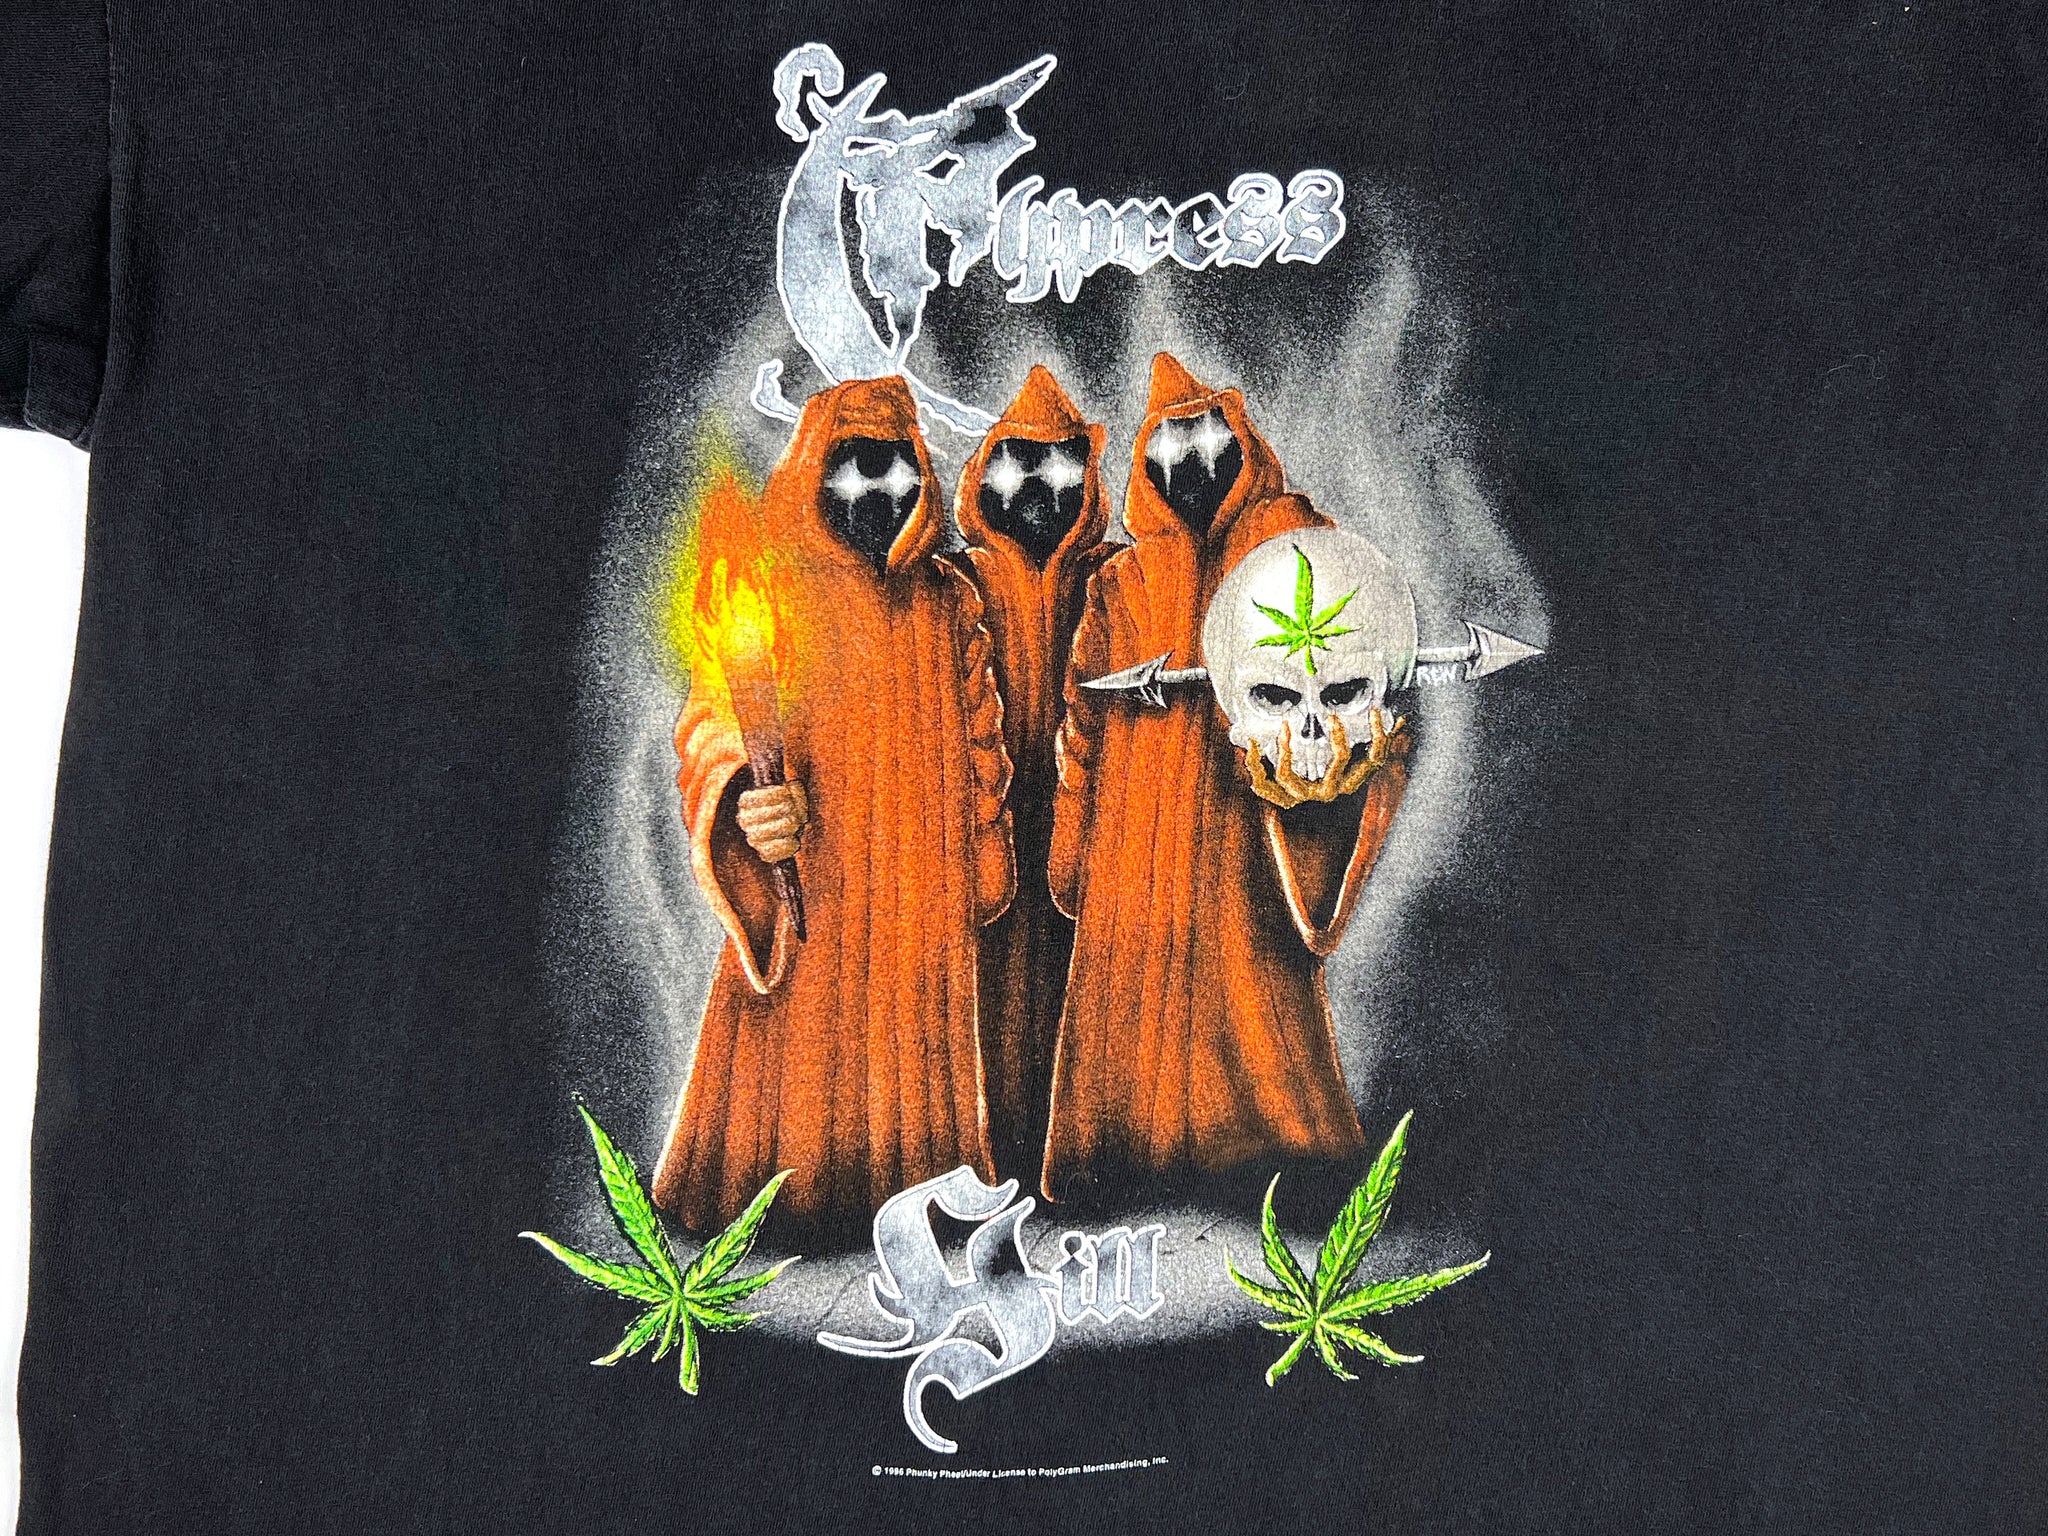 Cypress Hill T-Shirt